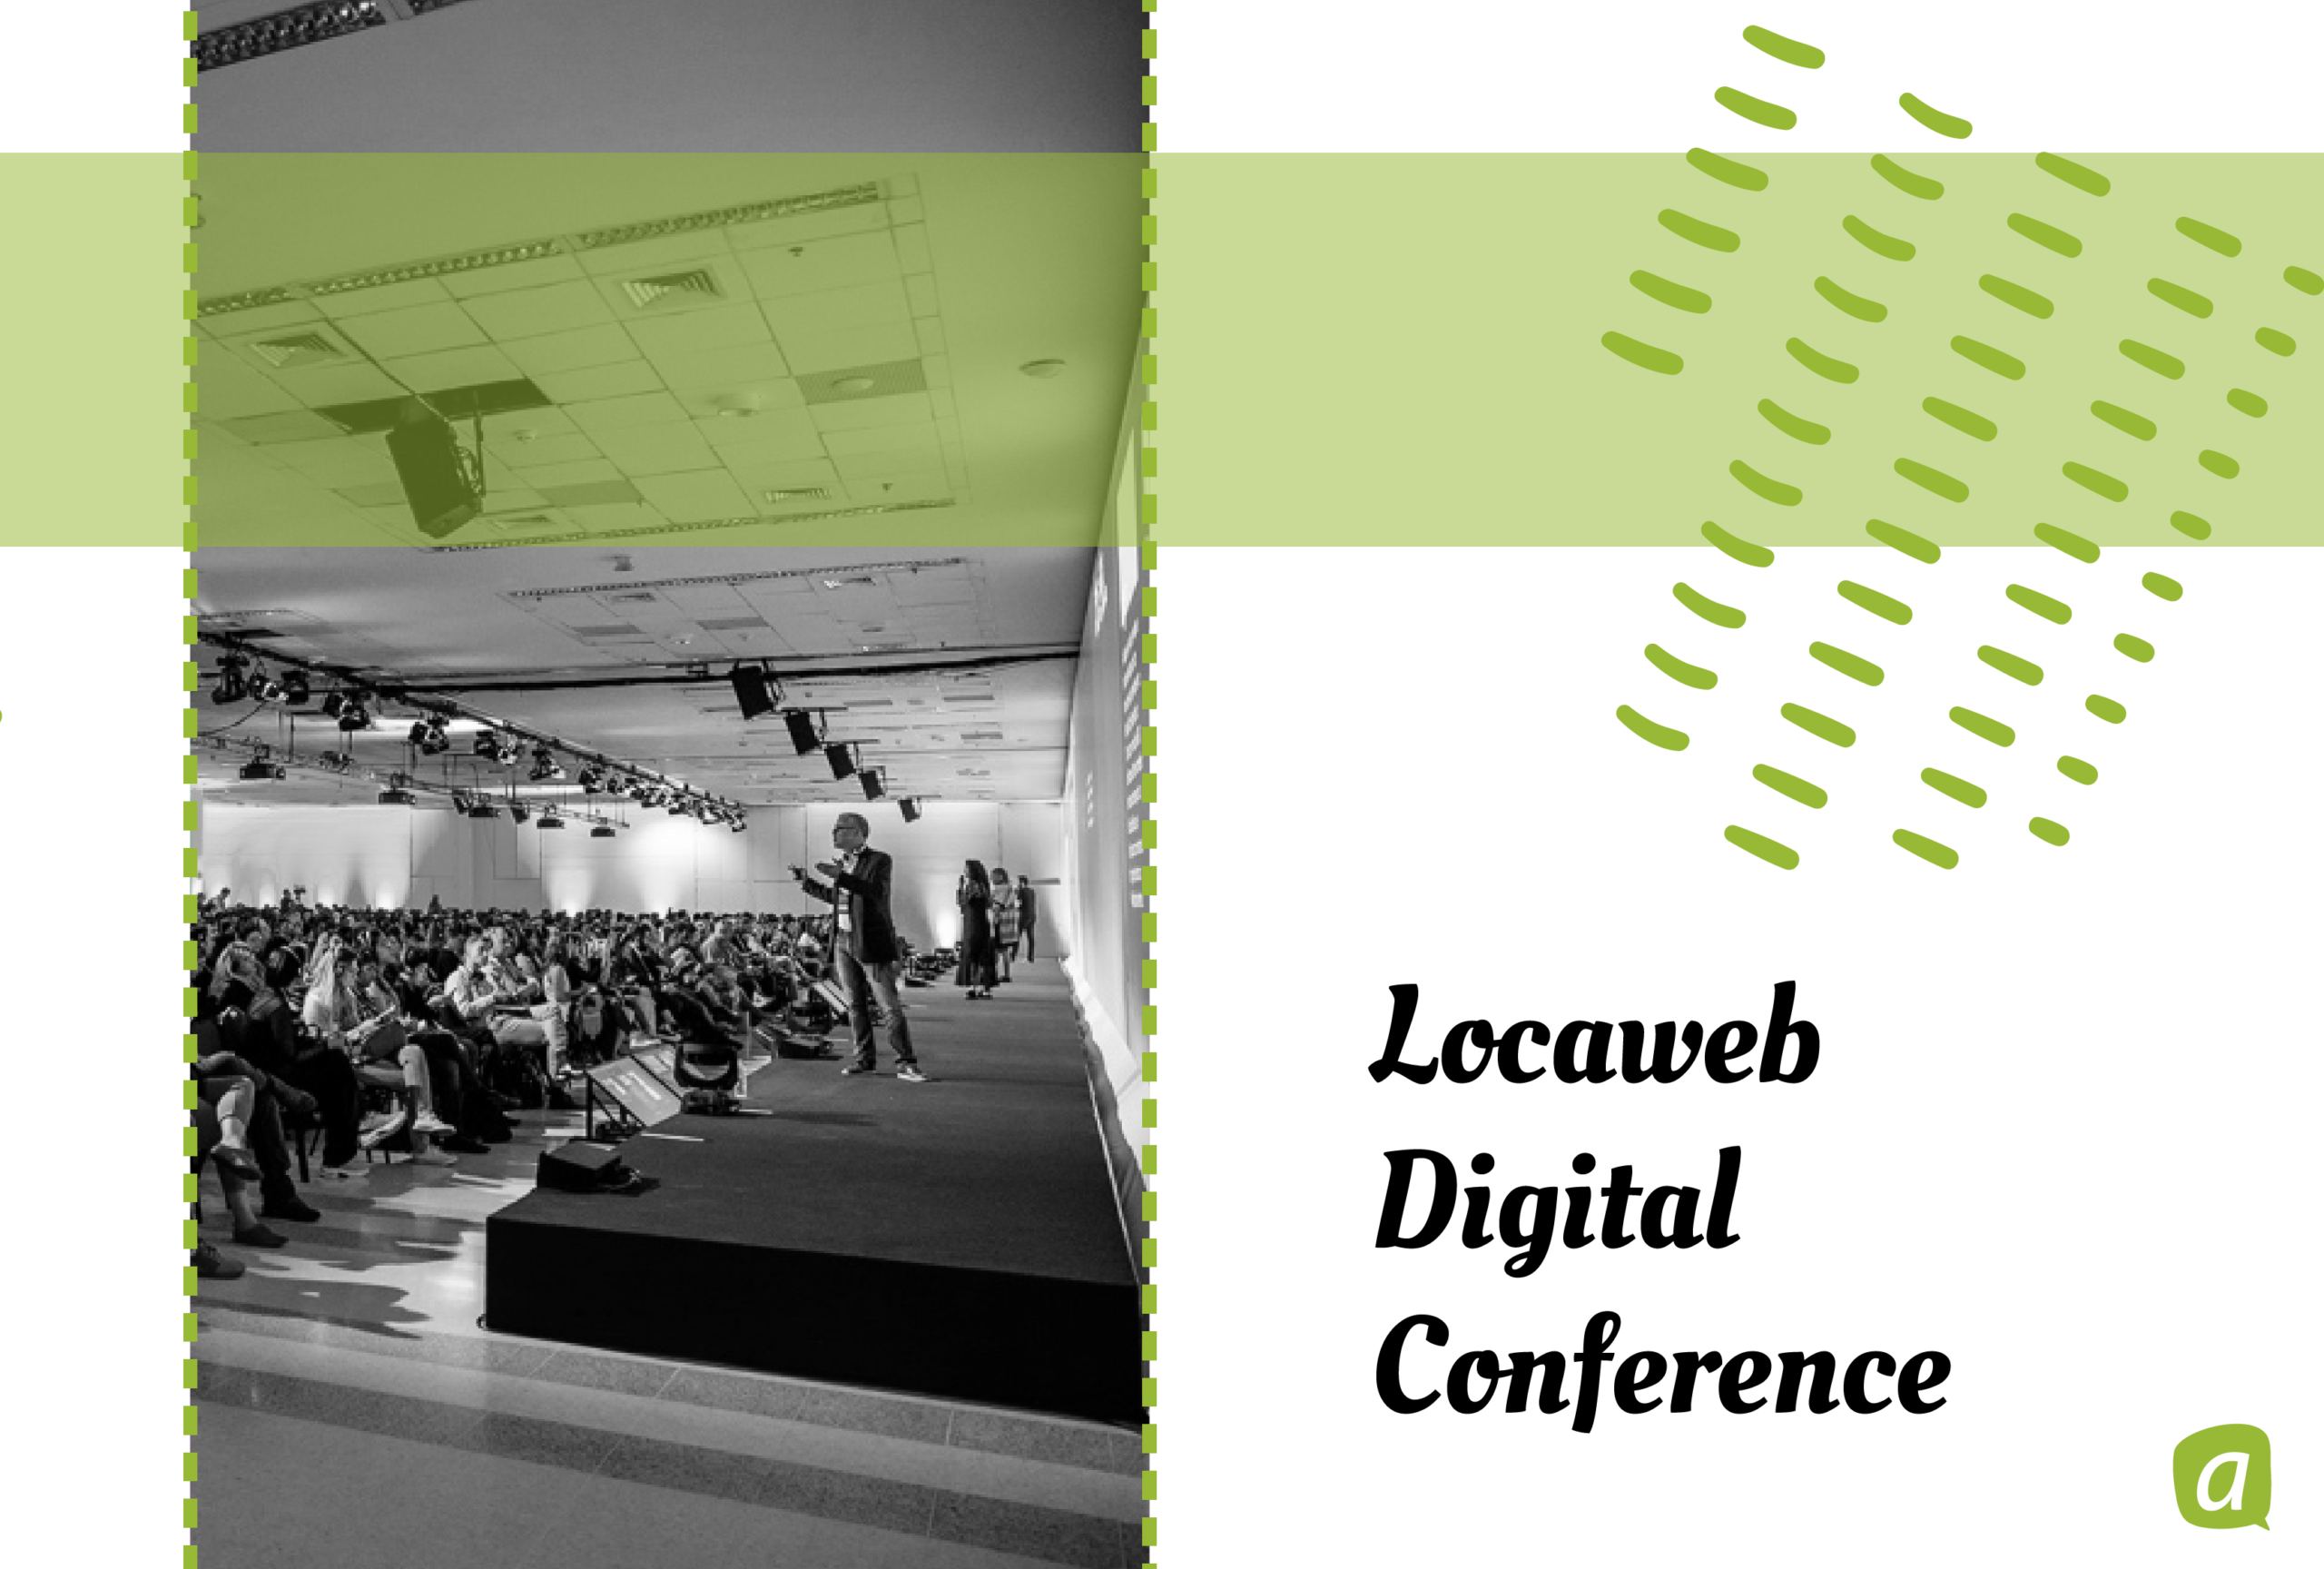 Locaweb Digital Conference